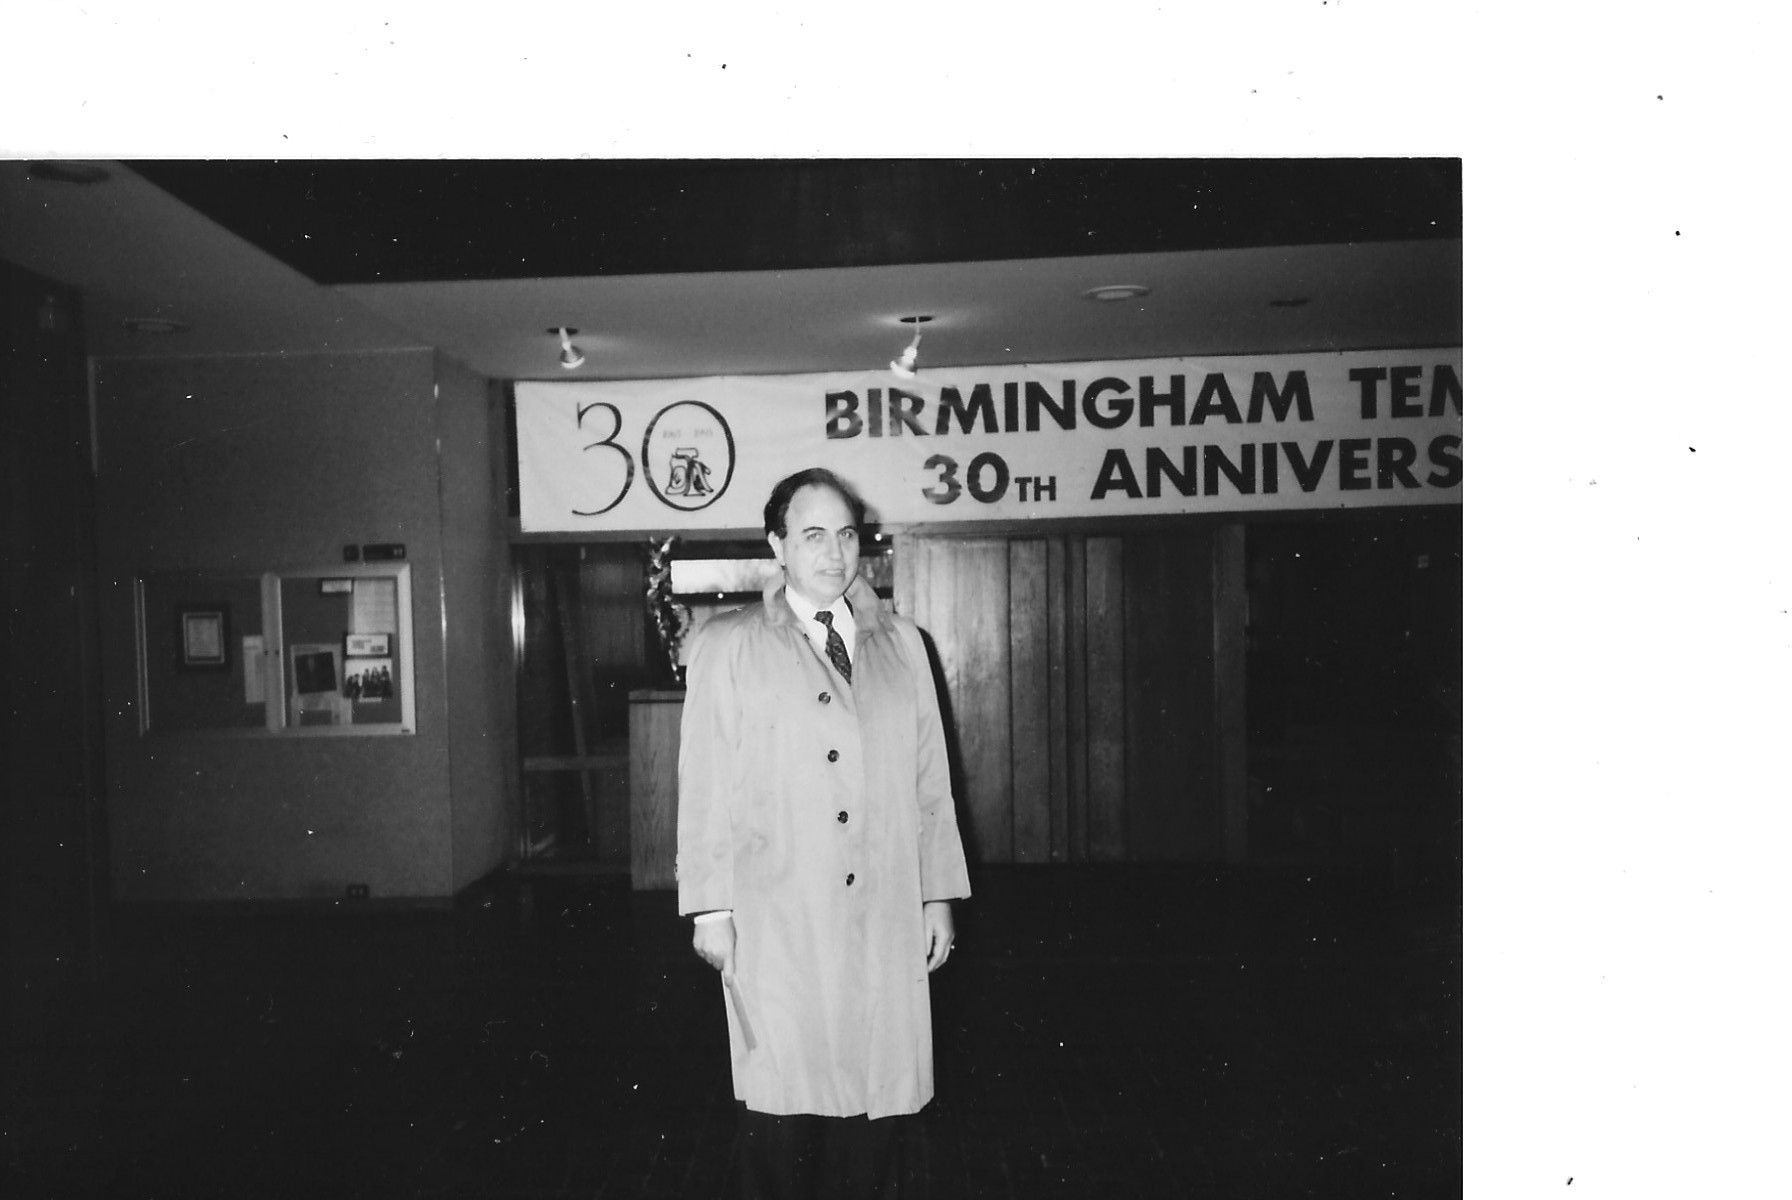 Sherwin on Birmingham Temple th Anniversary